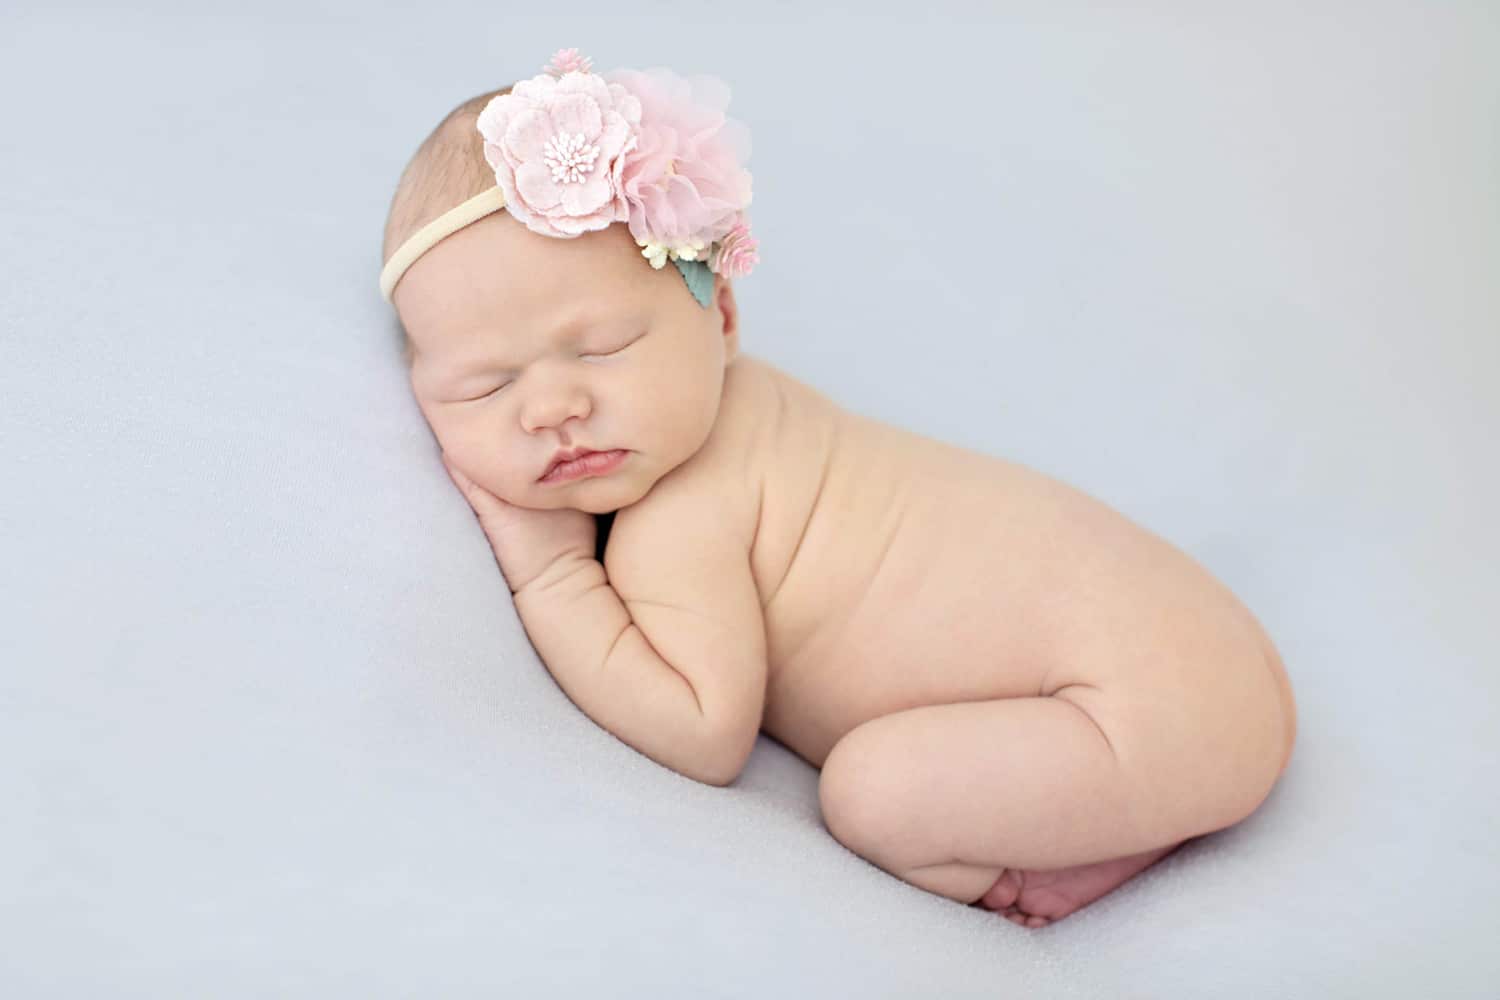 A newborn baby with a flower headband.